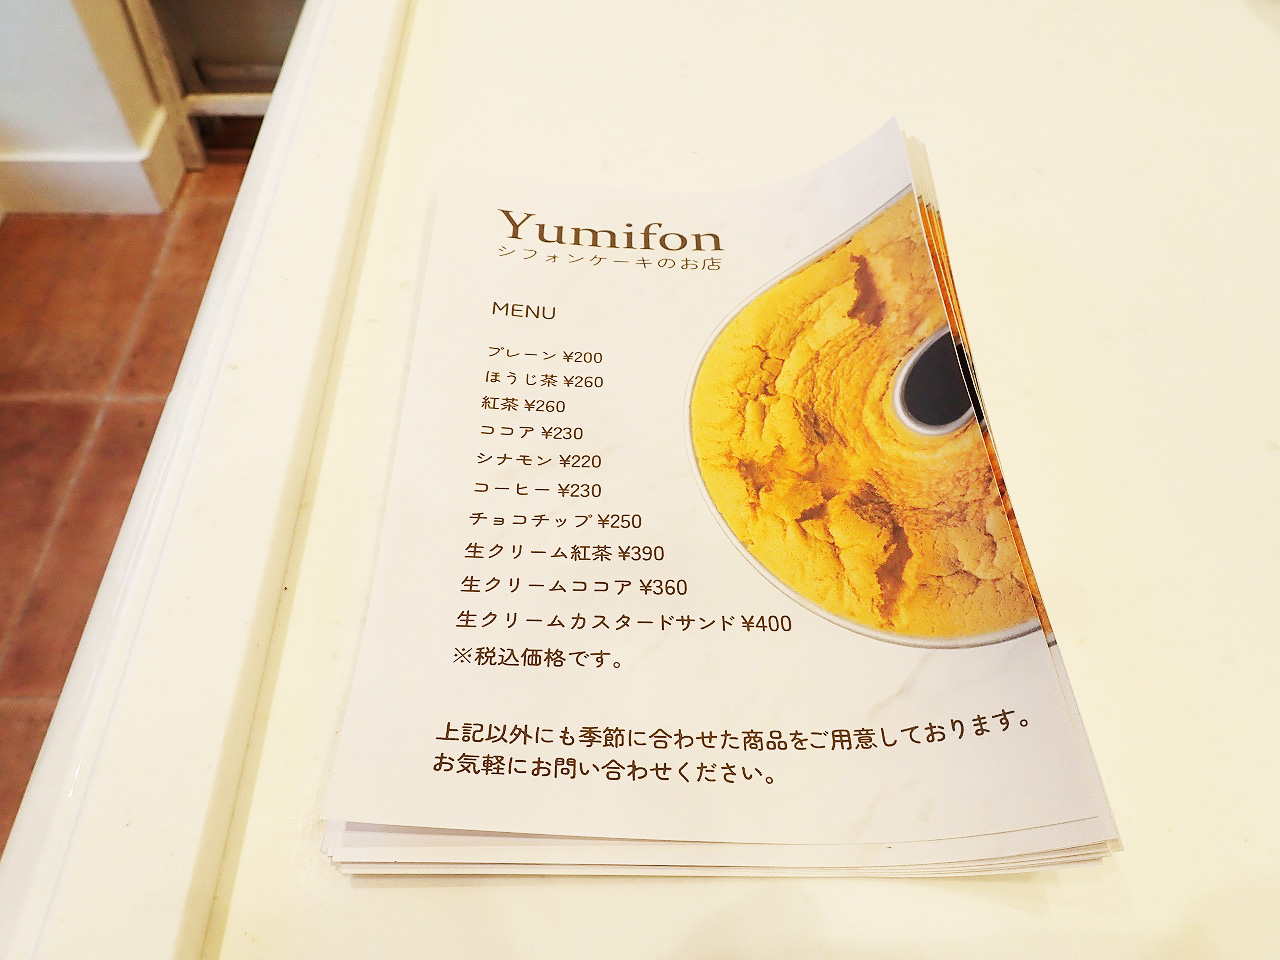 『Yumifon』のシフォンケーキのメニュー